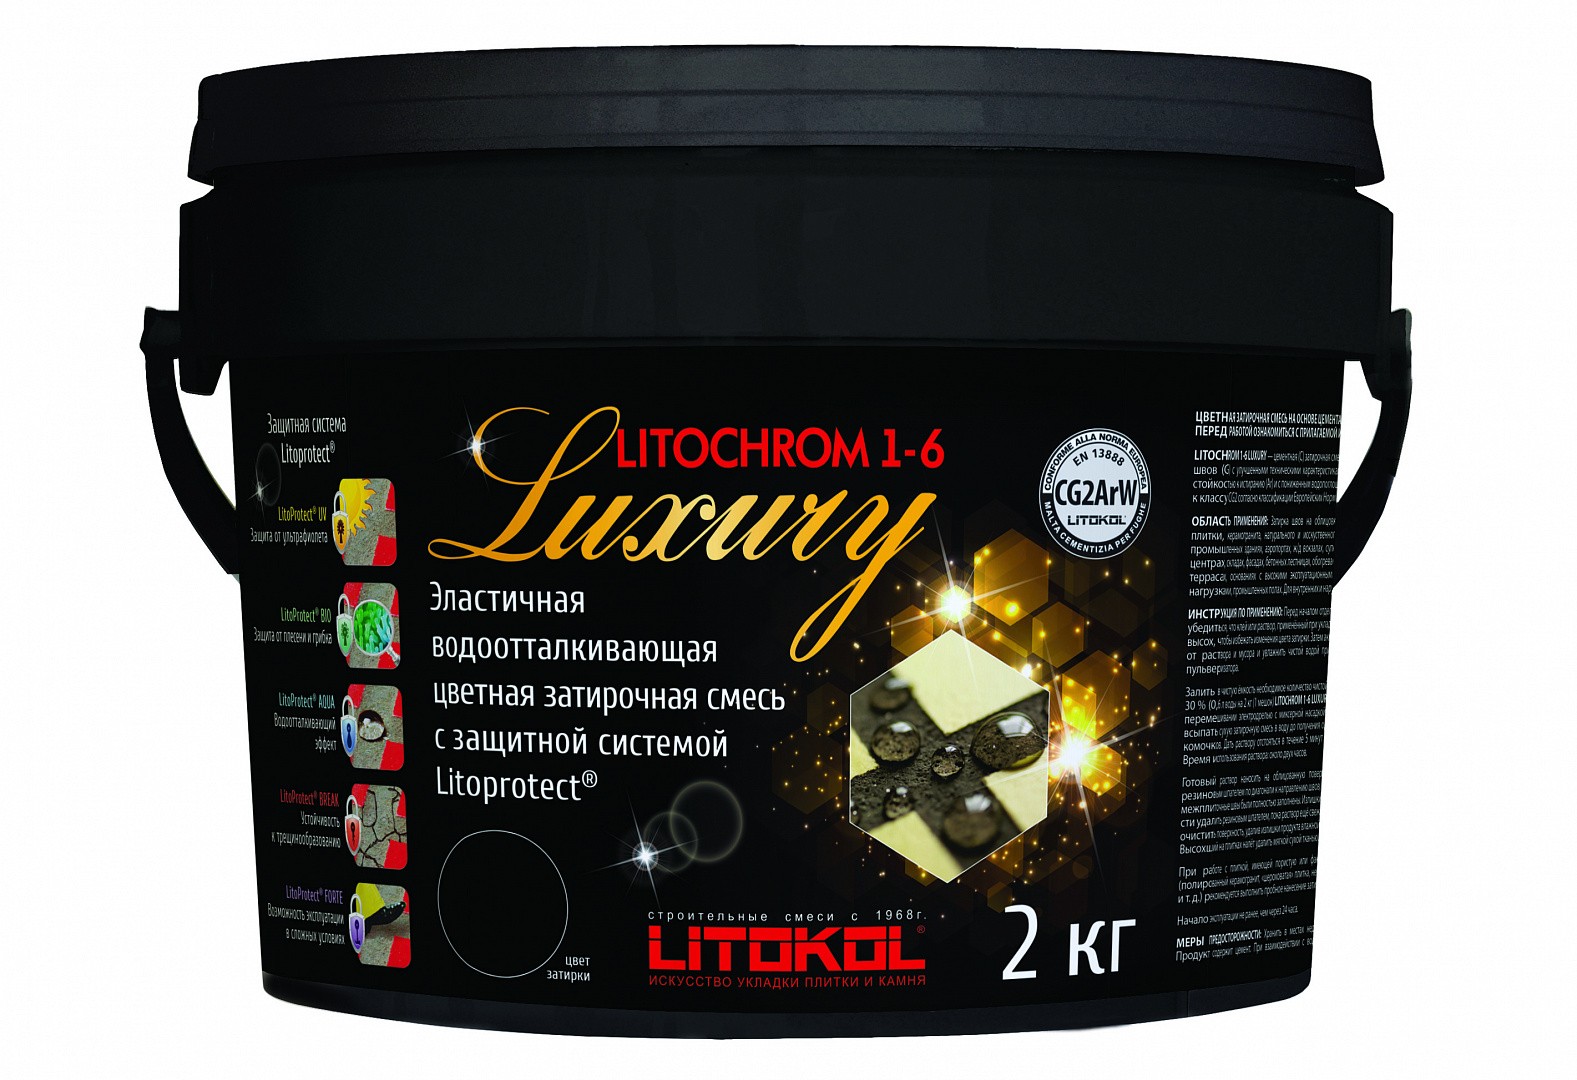 Цементная затирочная смесь LITOCHROM 1-6 LUXURY C.640